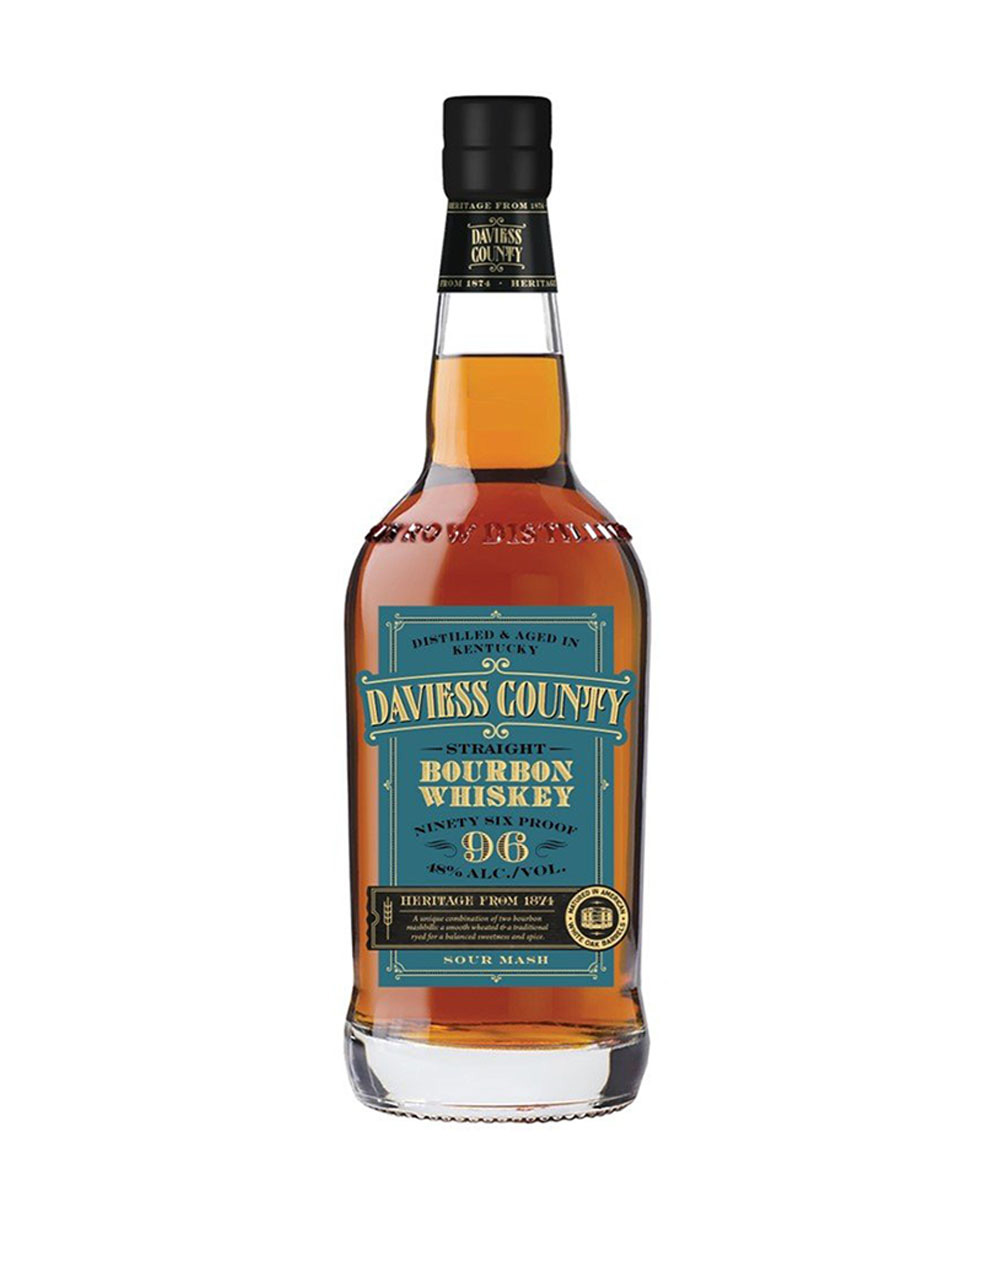 Daviess County sour mash 96 proof Kentucky Straight Bourbon Whiskey